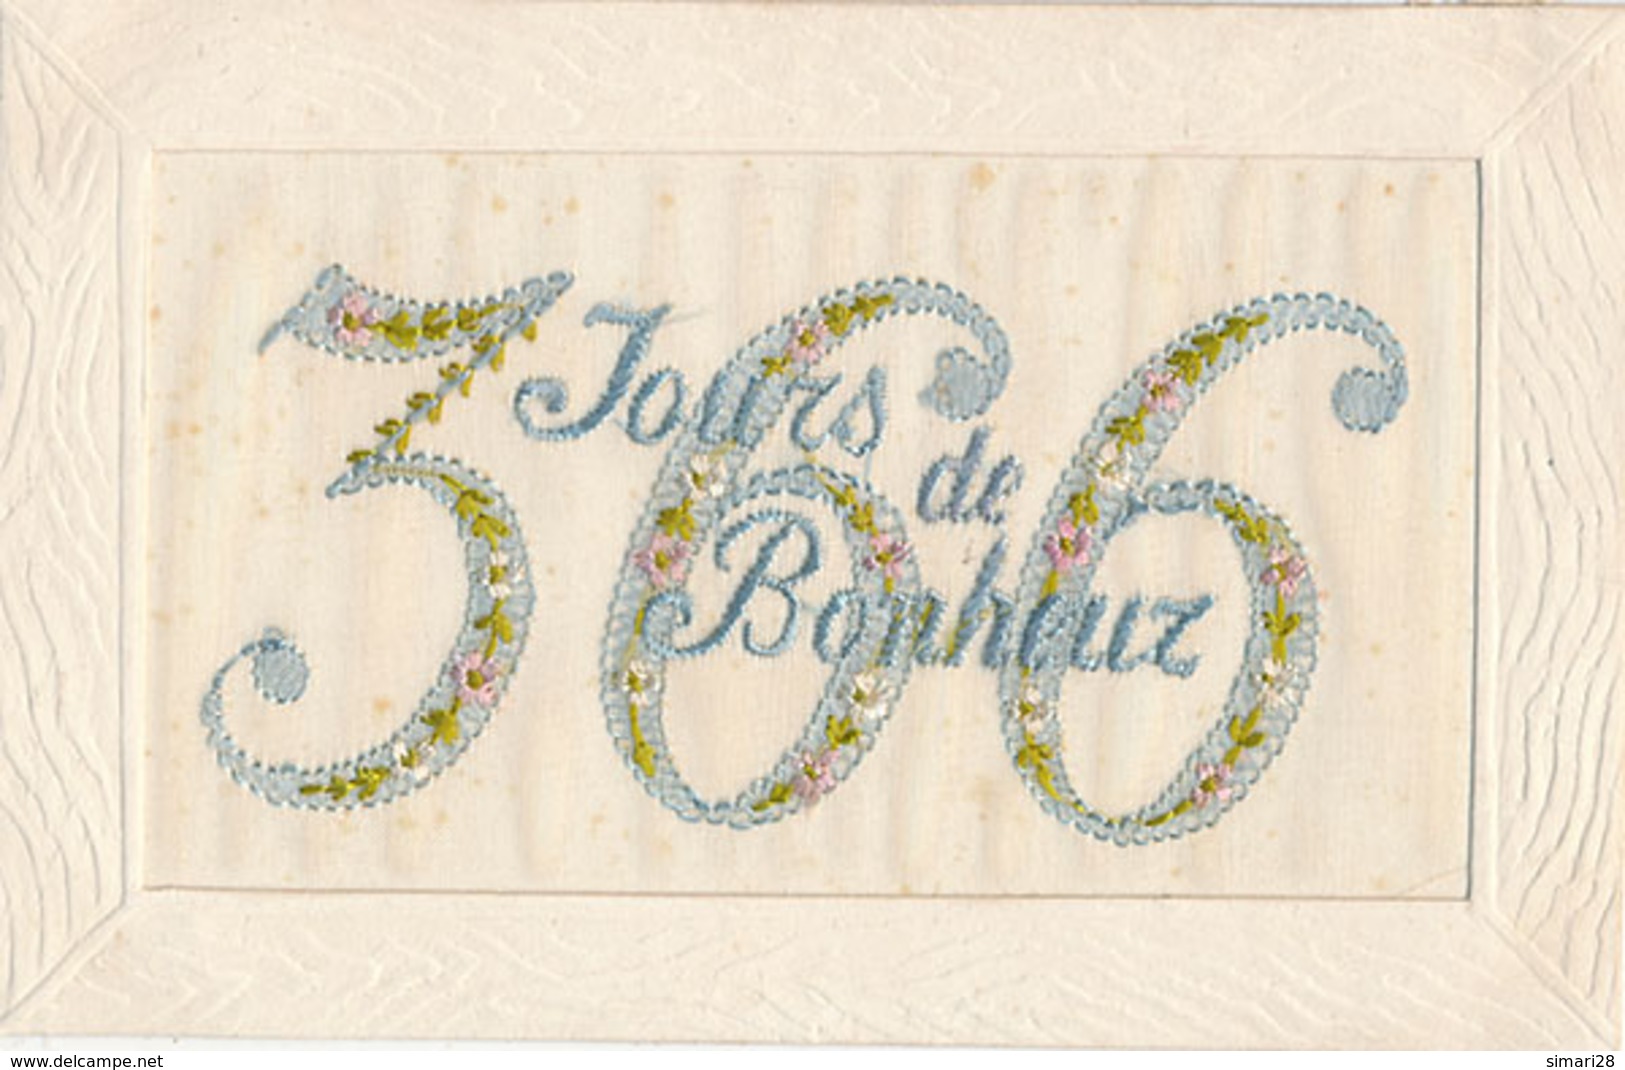 CARTE BRODEE - 366 JOURS DE BONHEUR (ANNEE BISSEXTILE) - Embroidered